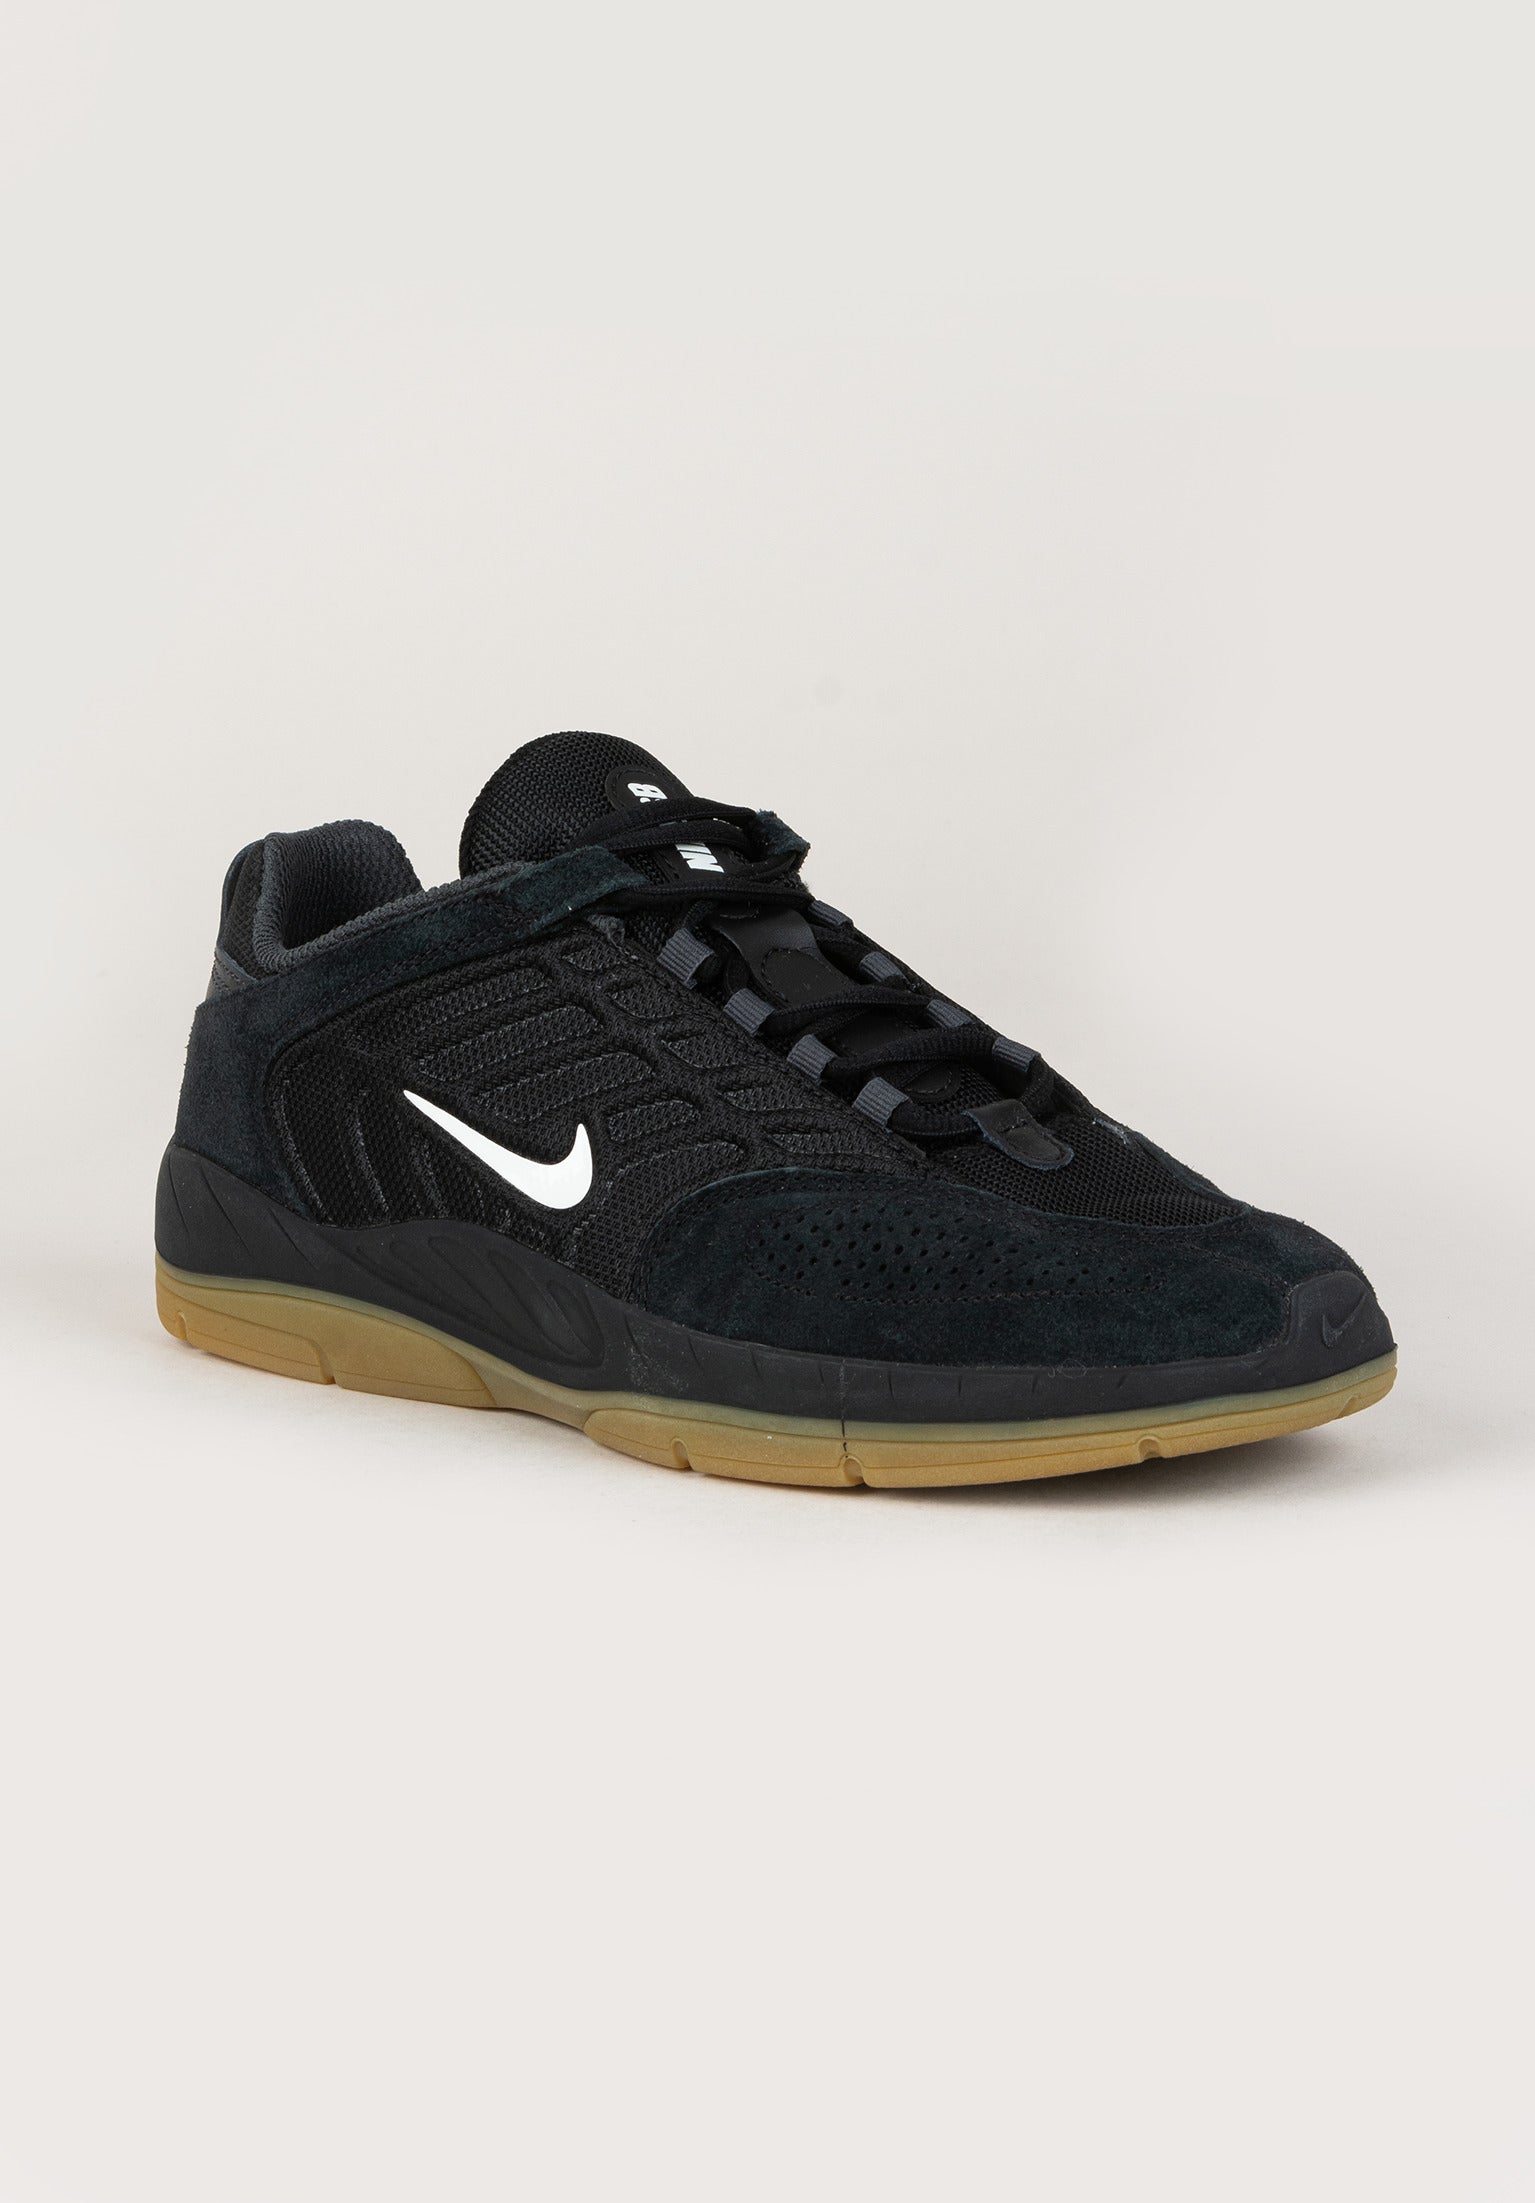 Vertebrae Nike SB Mens Shoes in black-summitwhite-anthracite-black for Men